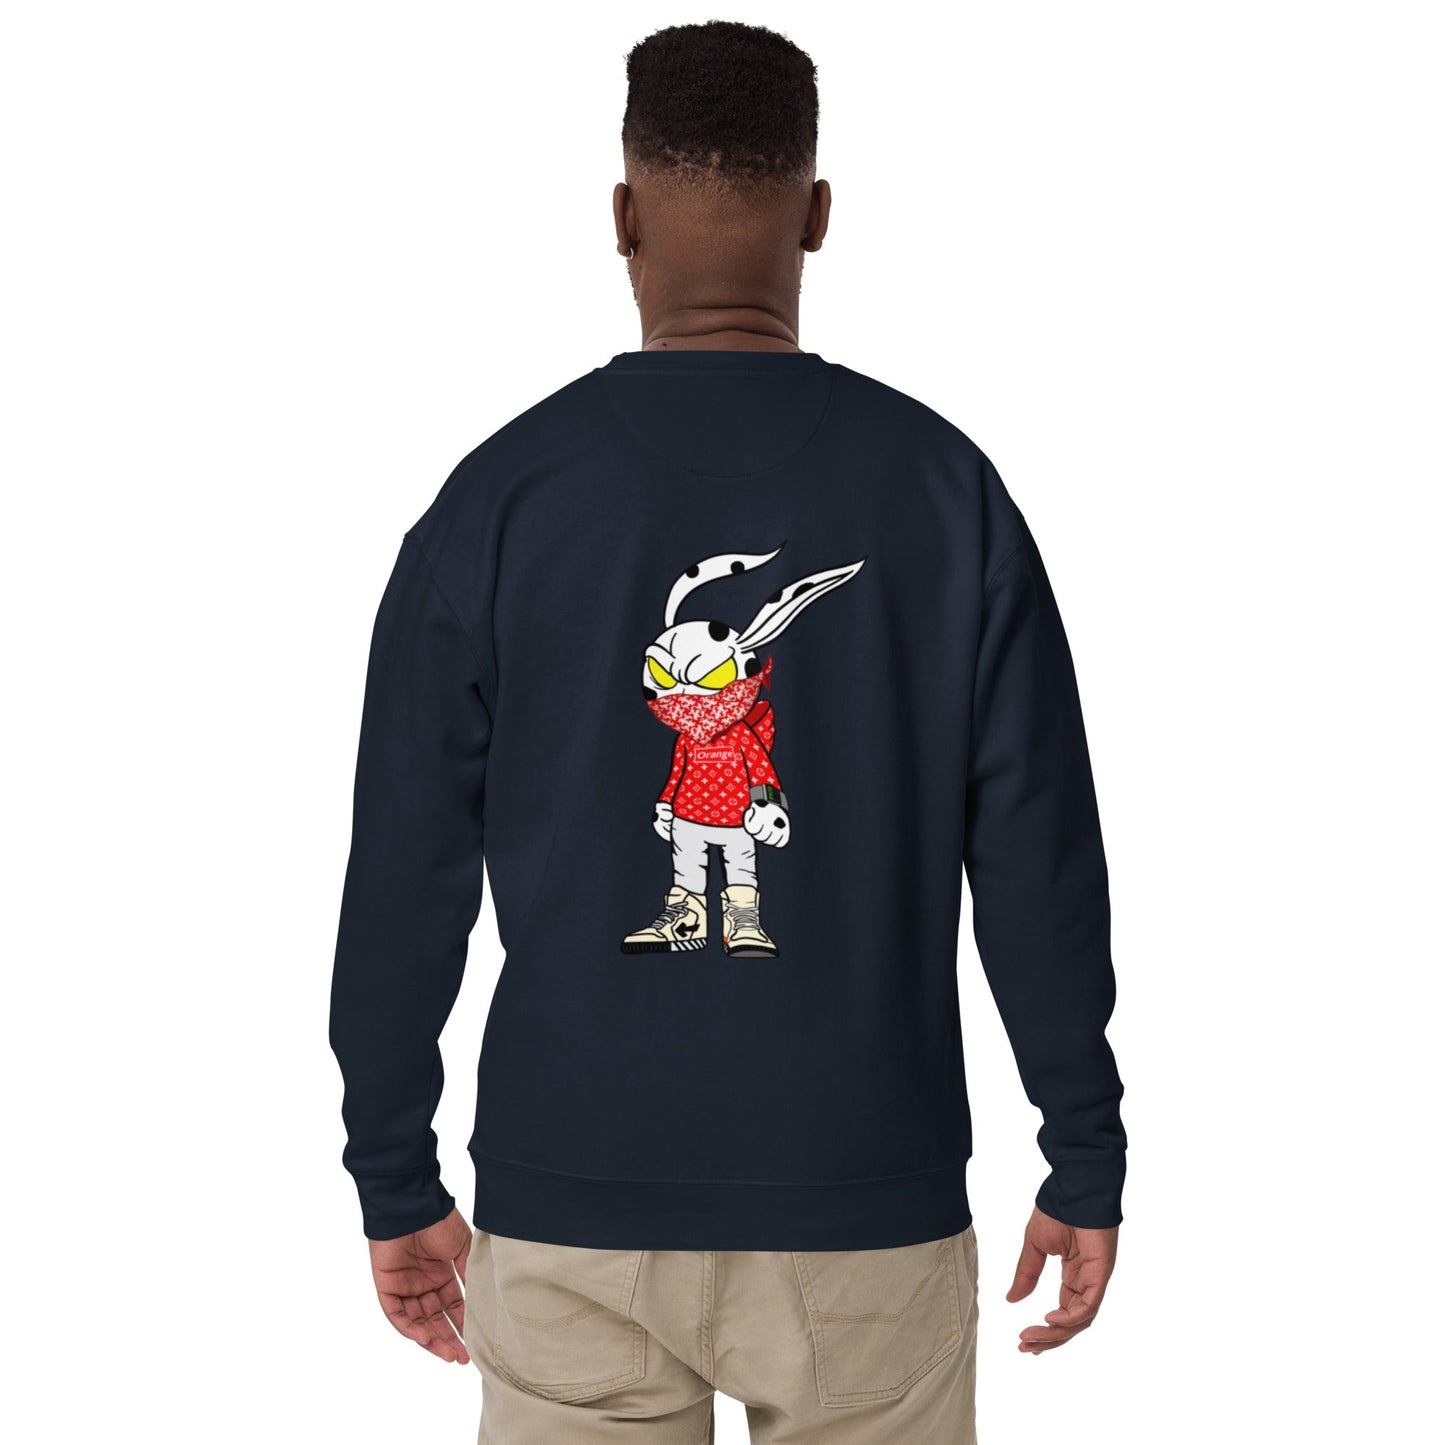 DOTS Style 2 Sweatshirt